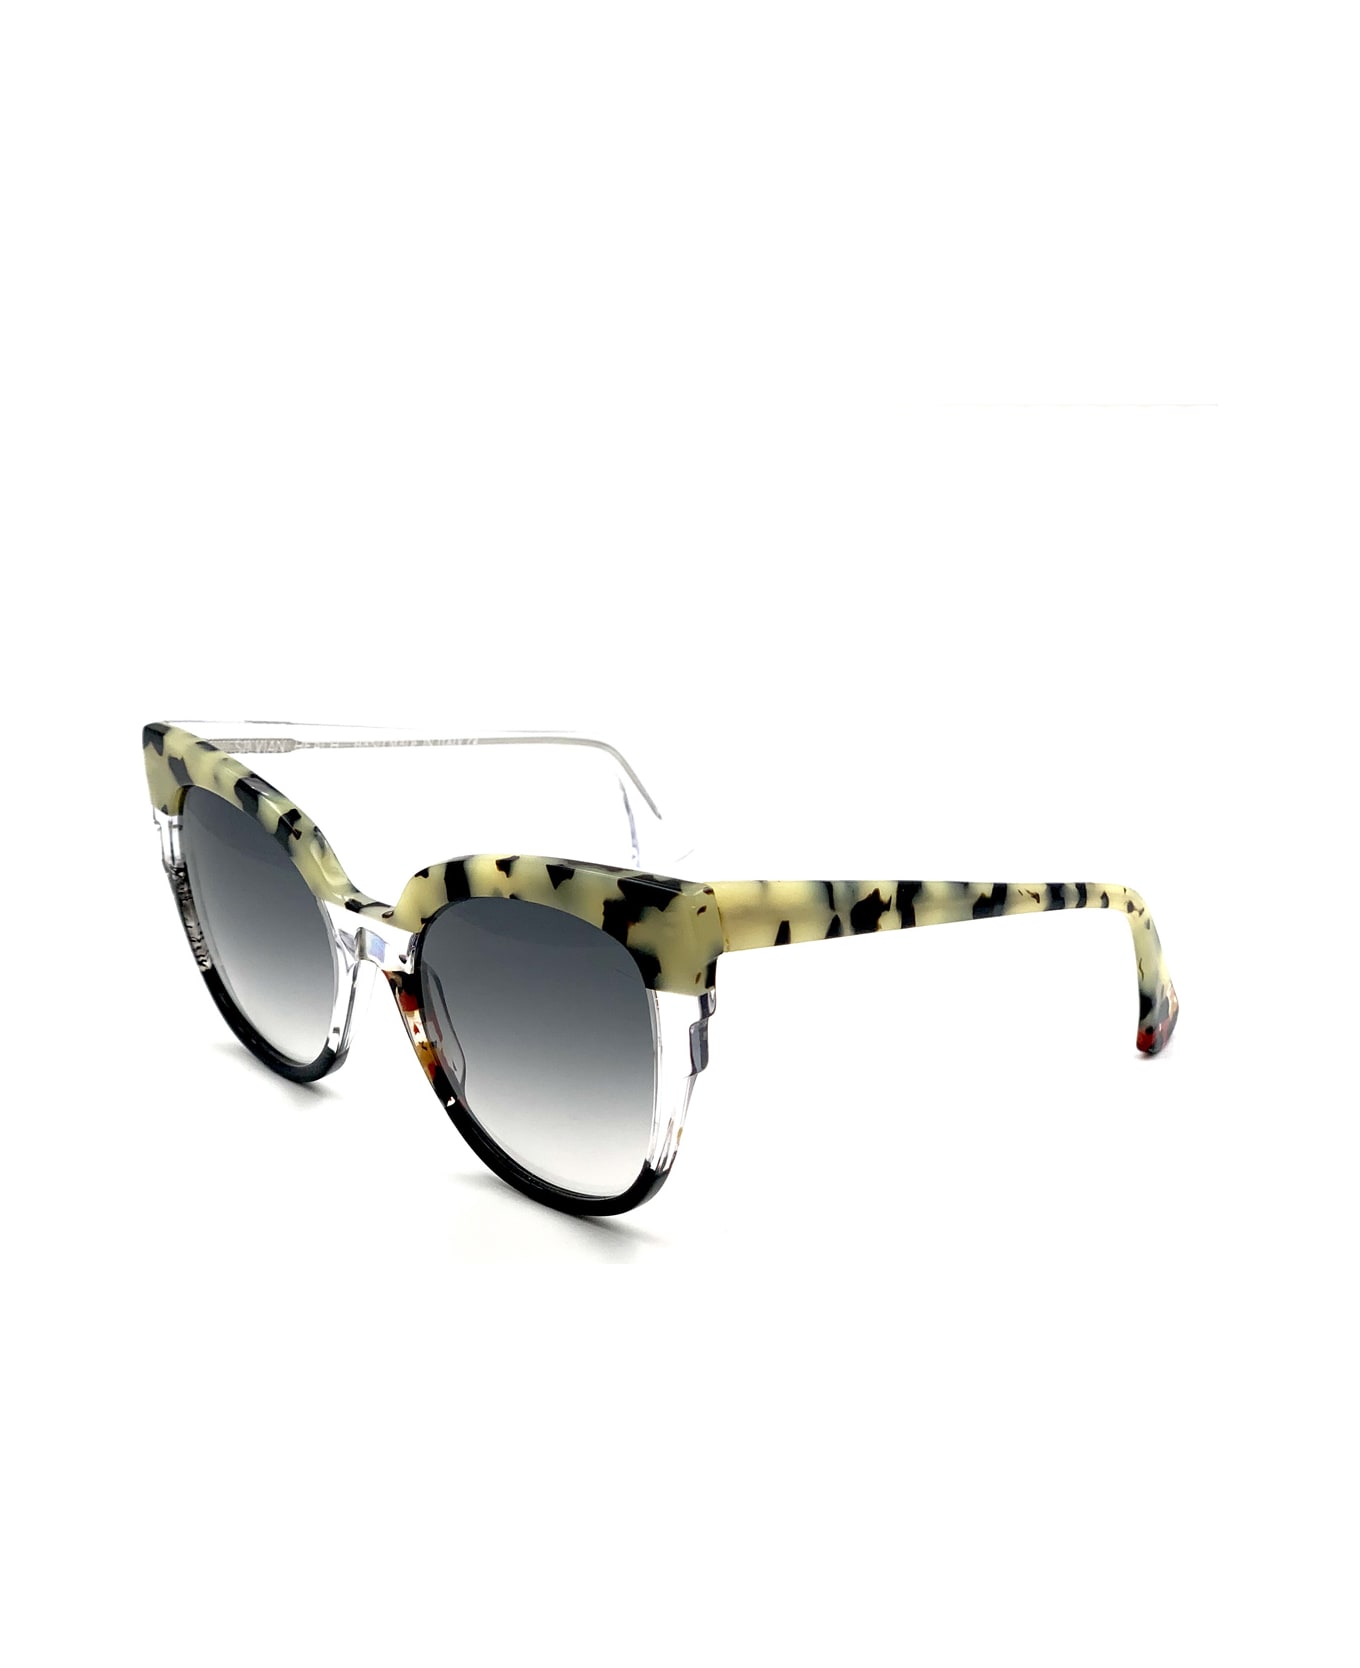 Silvian Heach Jumble 492 Sunglasses - Multicolore